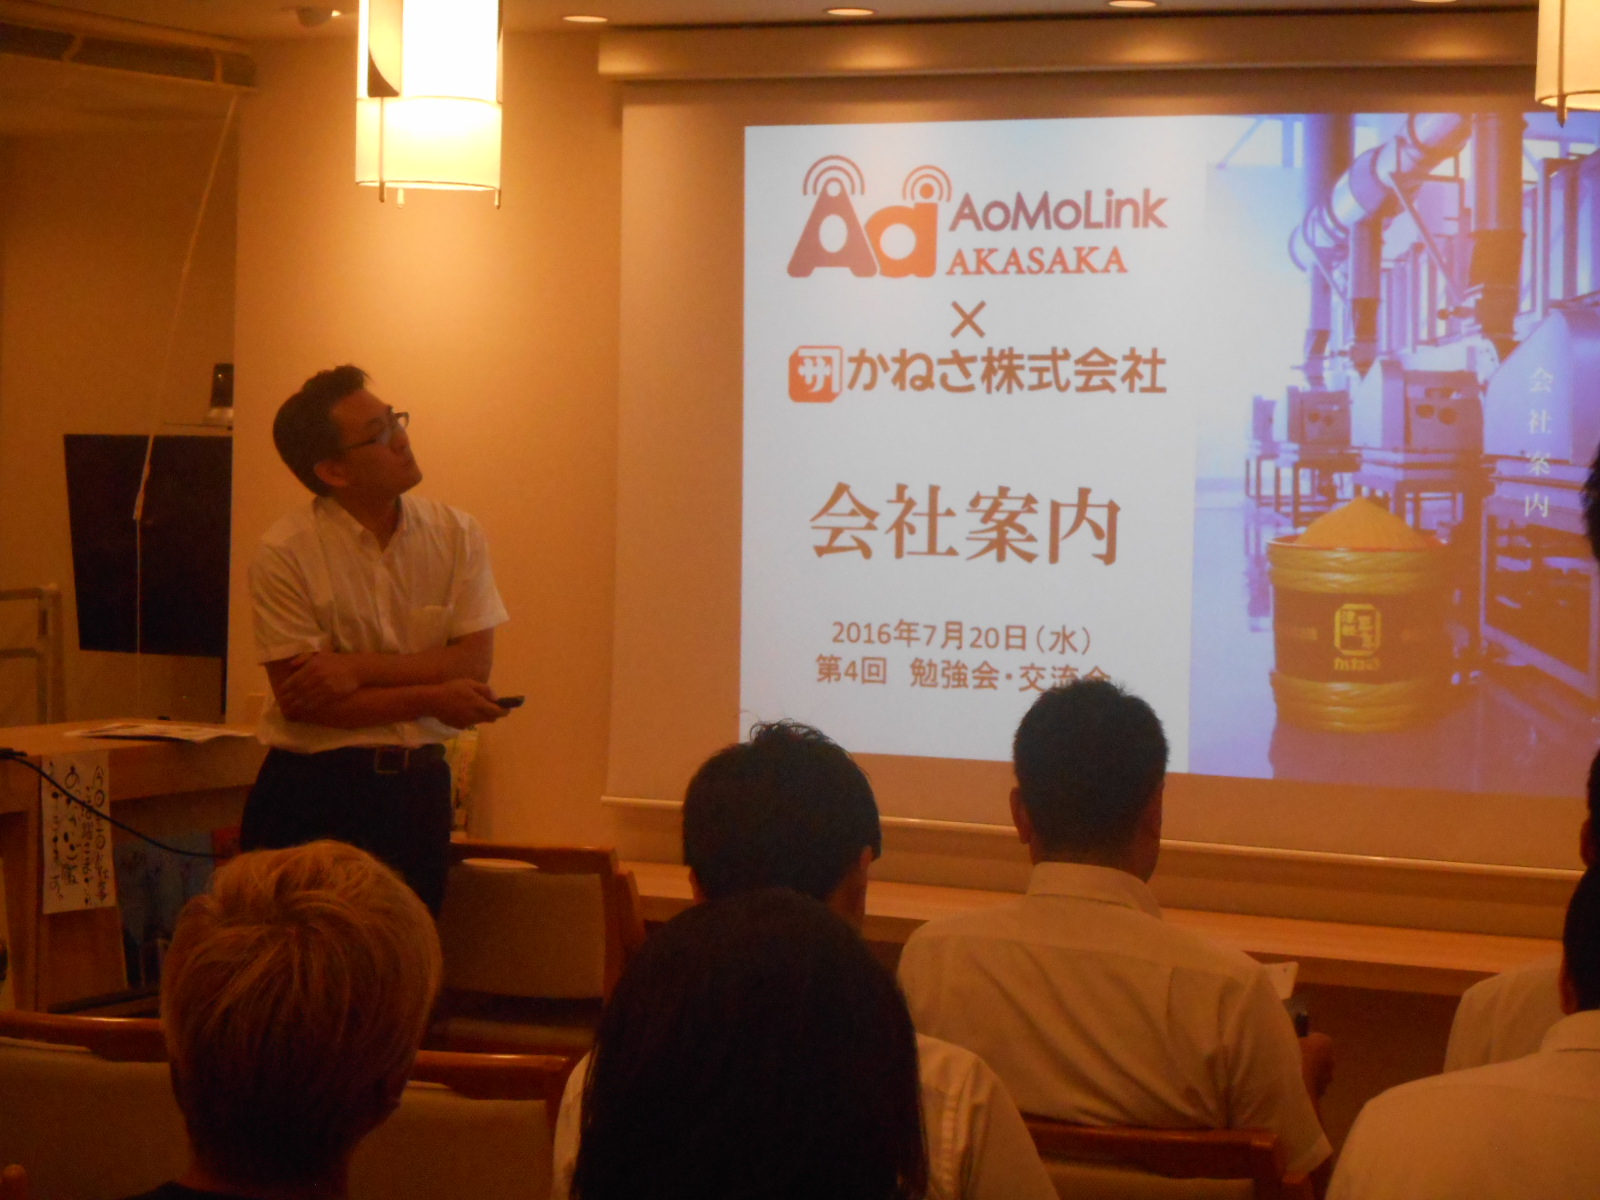 DSCN1840 - AoMoLink〜赤坂〜の第2回勉強会&交流会開催します。